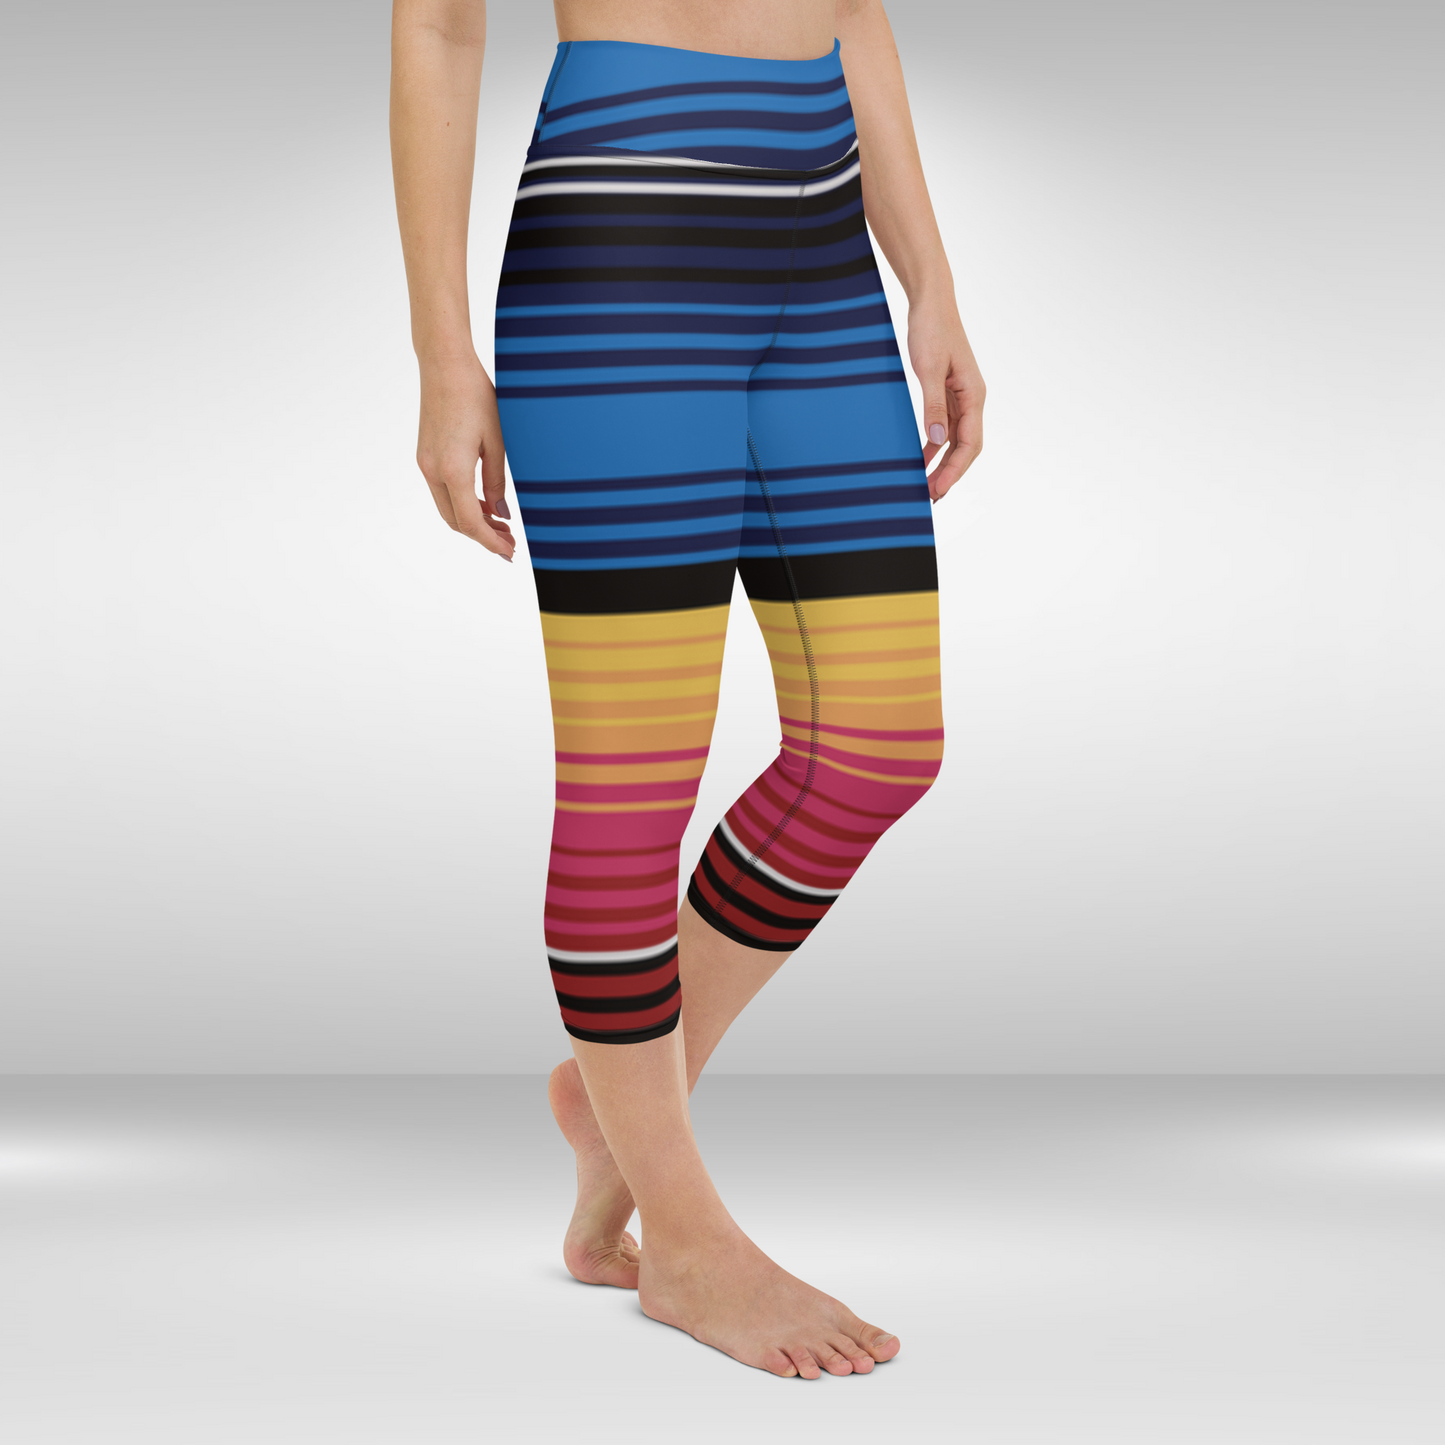 Women Capri Legging - Blue and Yellow Stripe Print